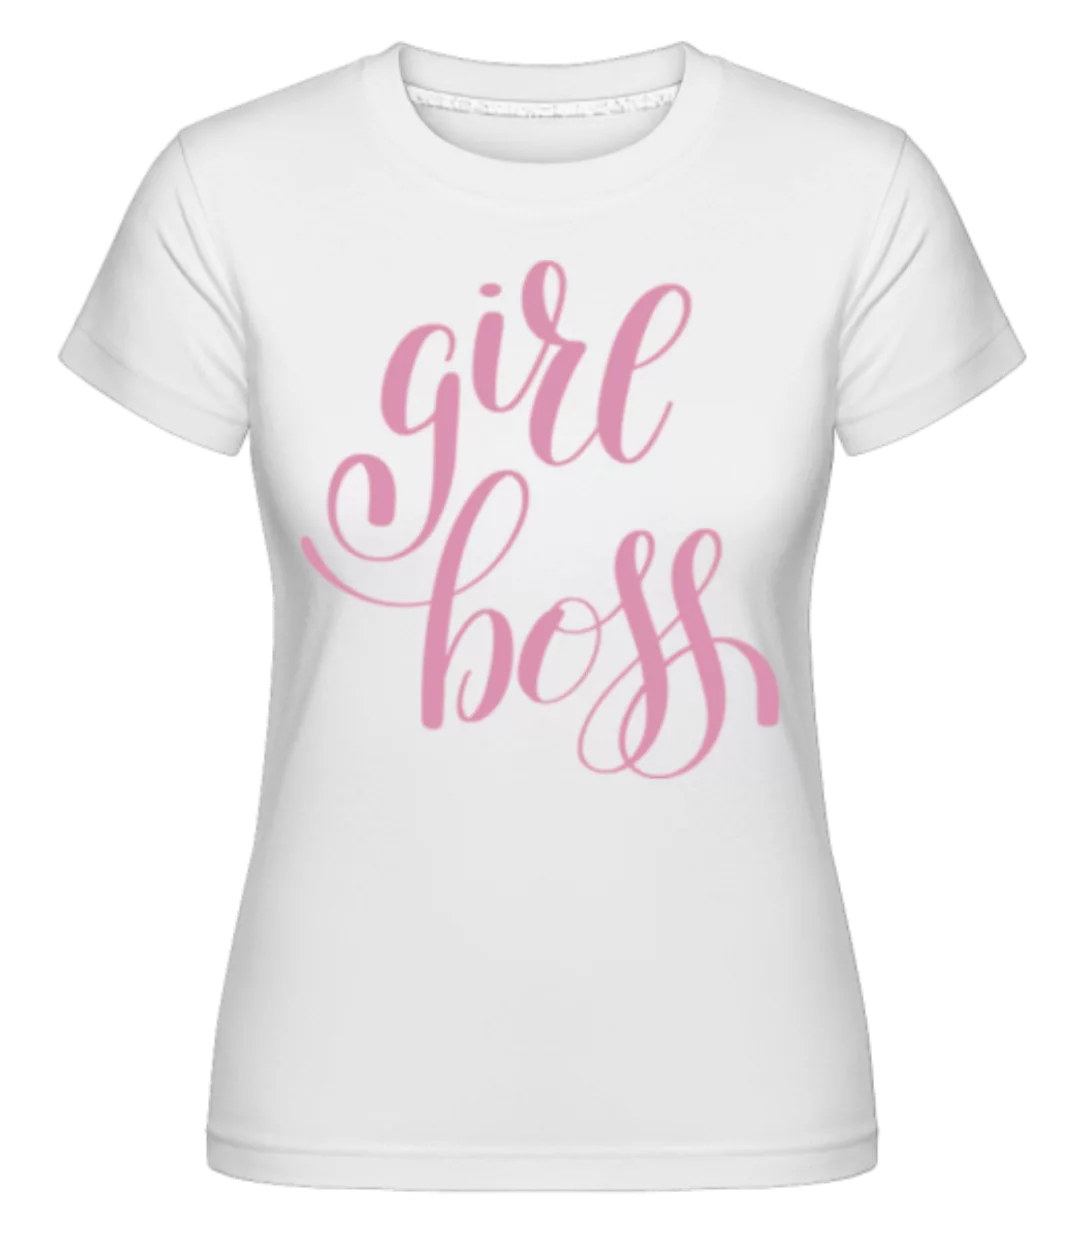 Motiv Girl Boss · Shirtinator Frauen T-Shirt günstig online kaufen